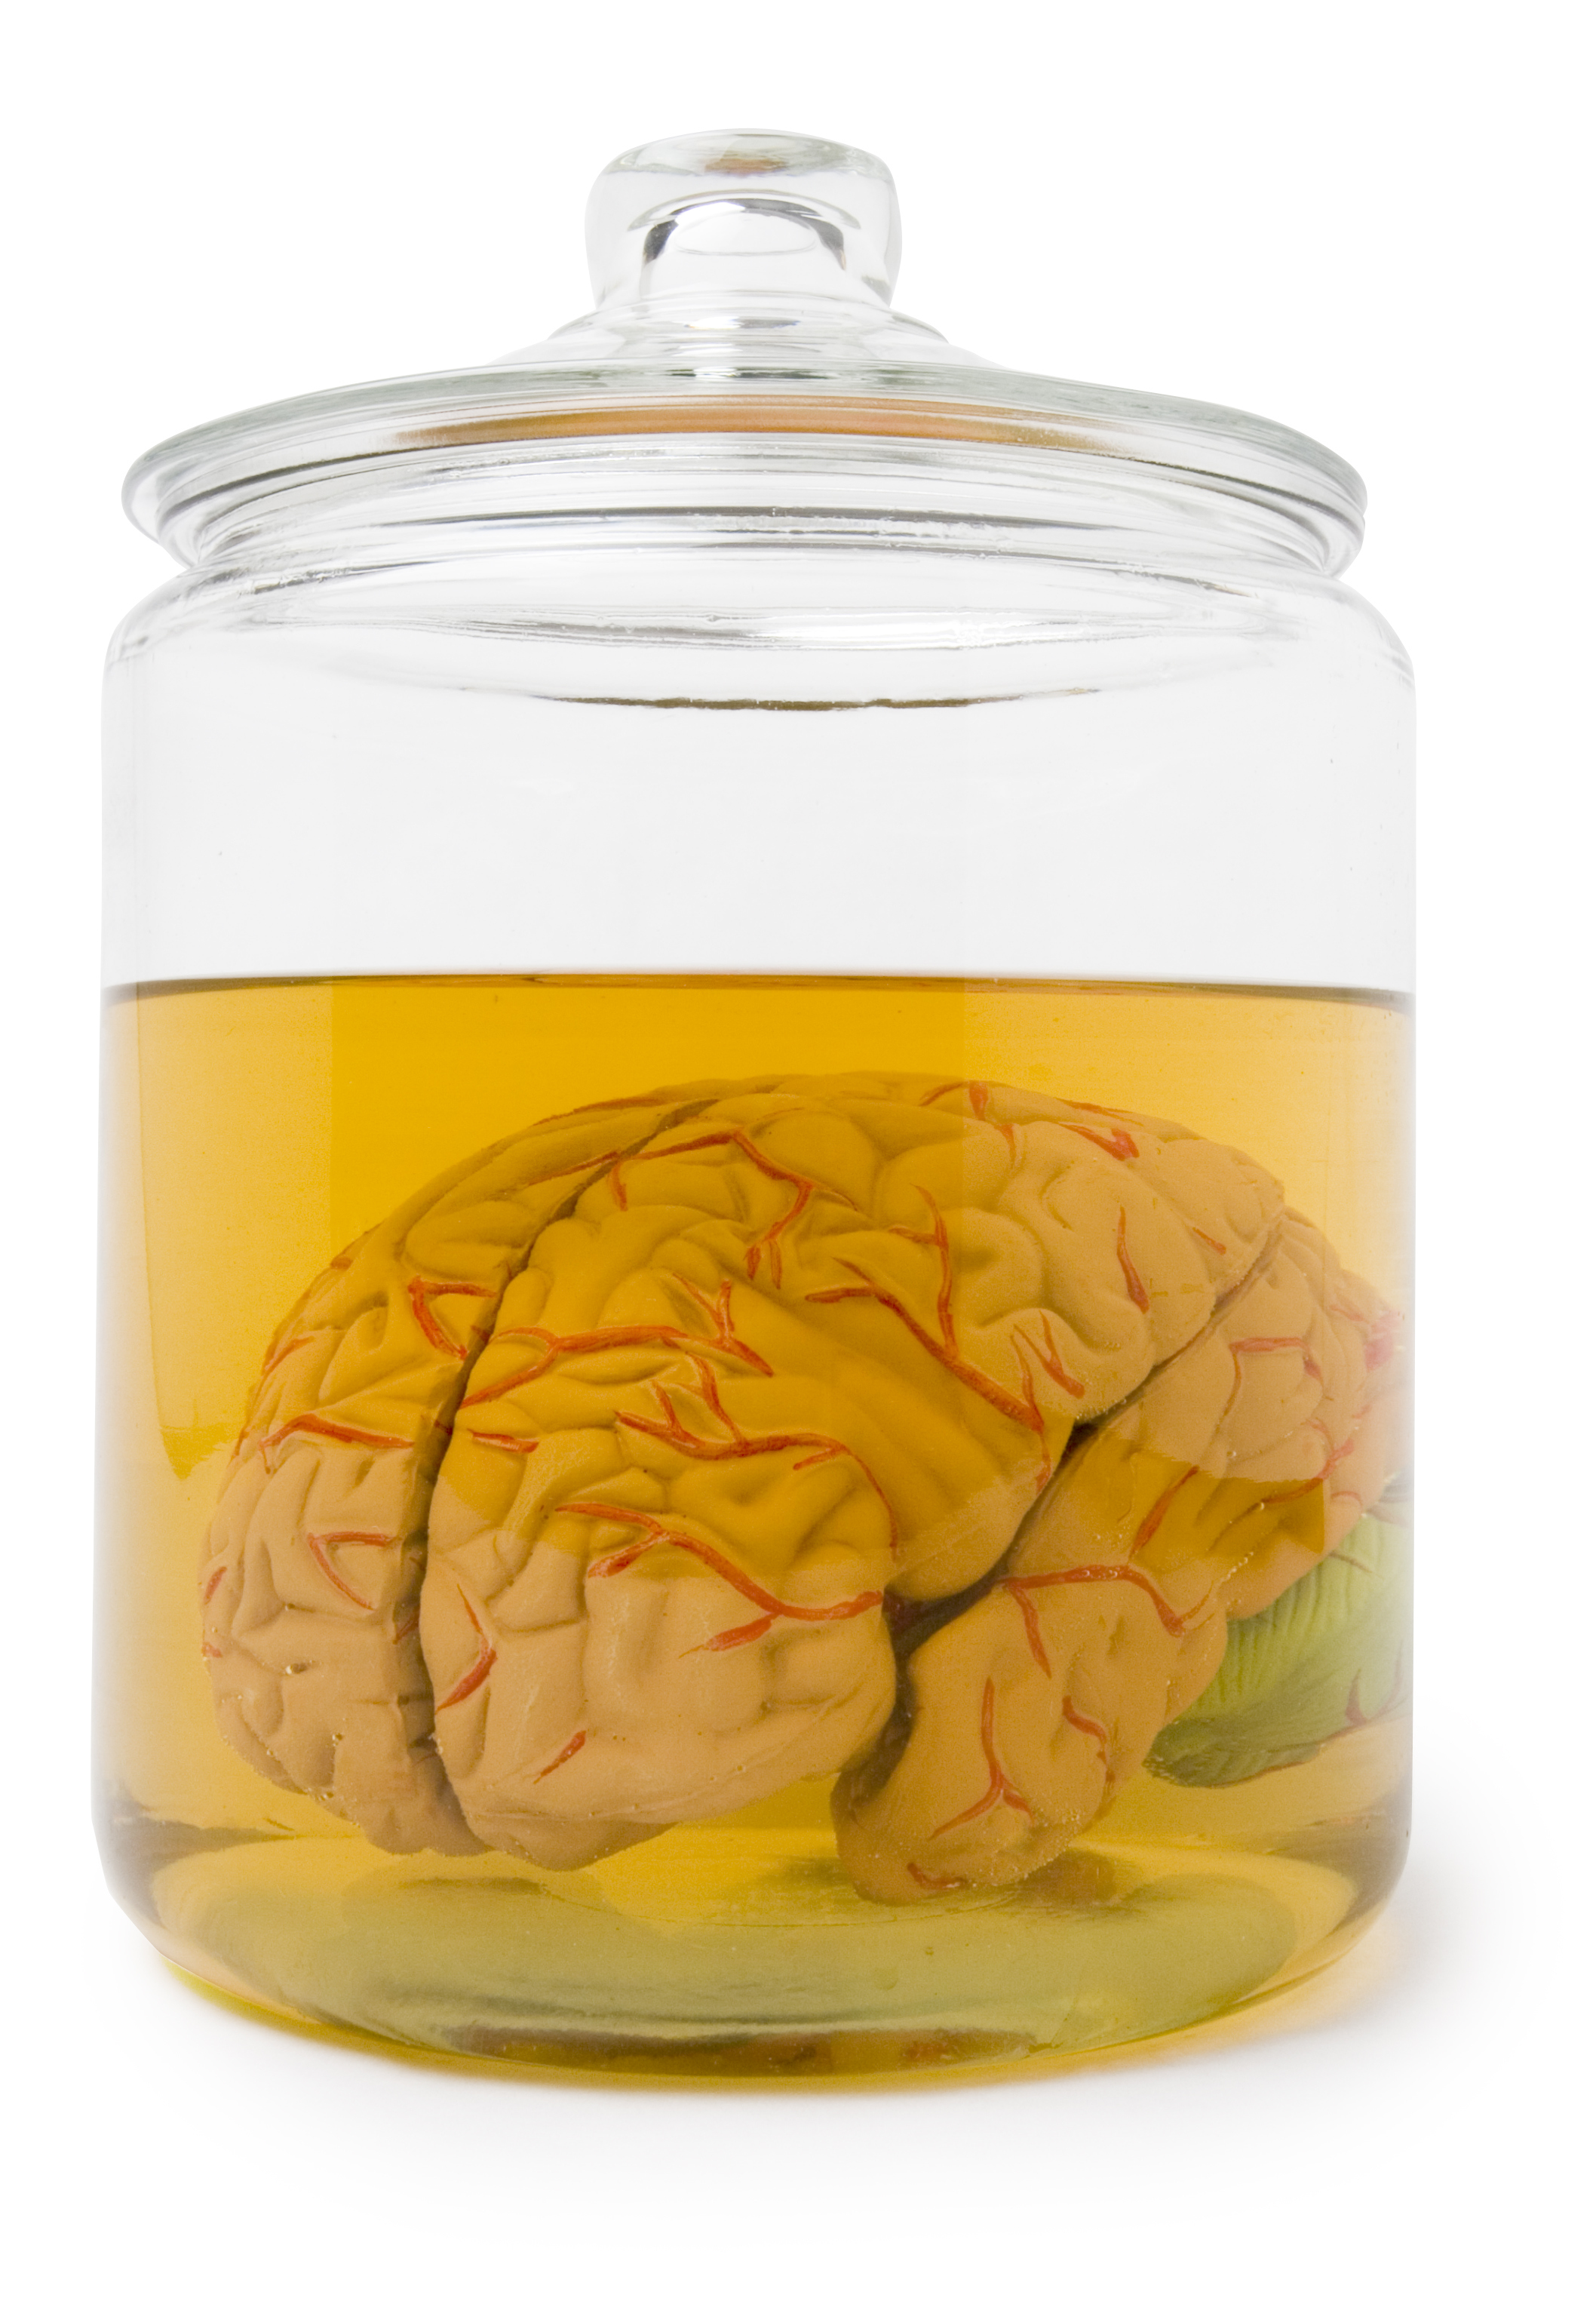 Brain in a jar with clipping path (Kenneth C. Zirkel&mdash;Getty Images)